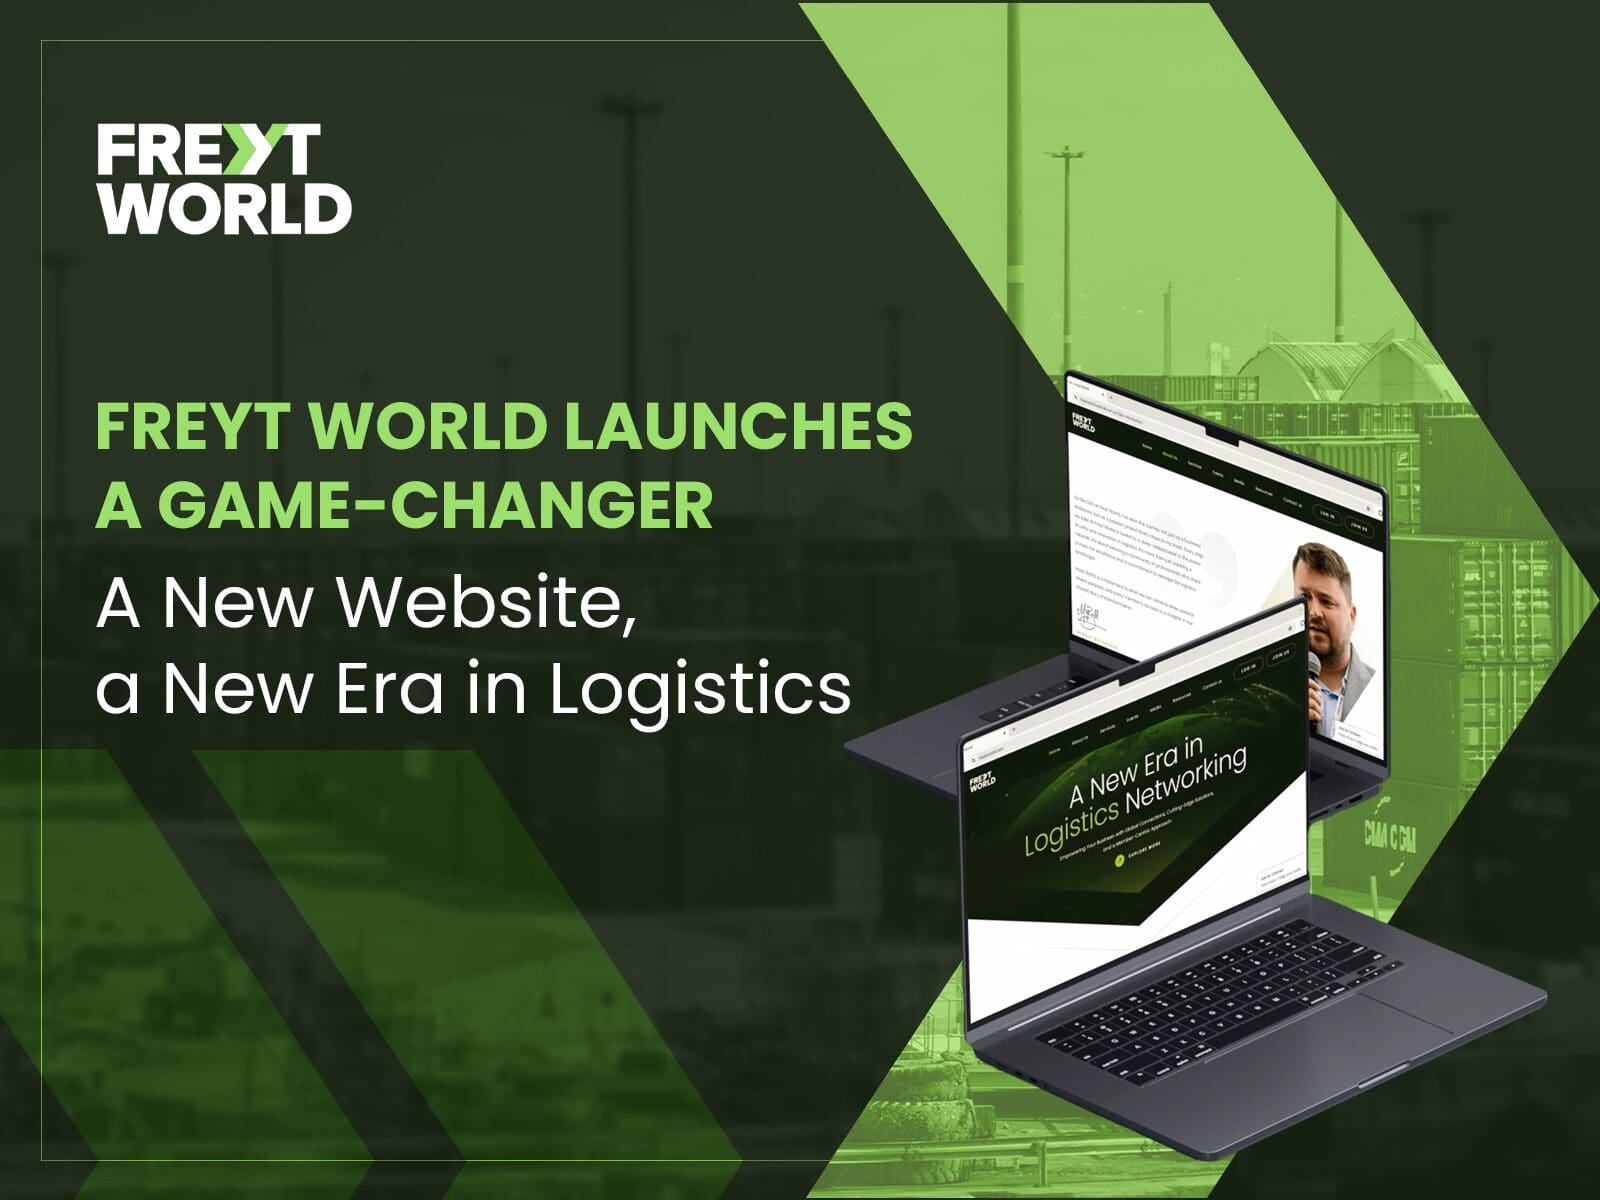 Freyt World launches a game-changer: A New Website, a New Era in Logistics